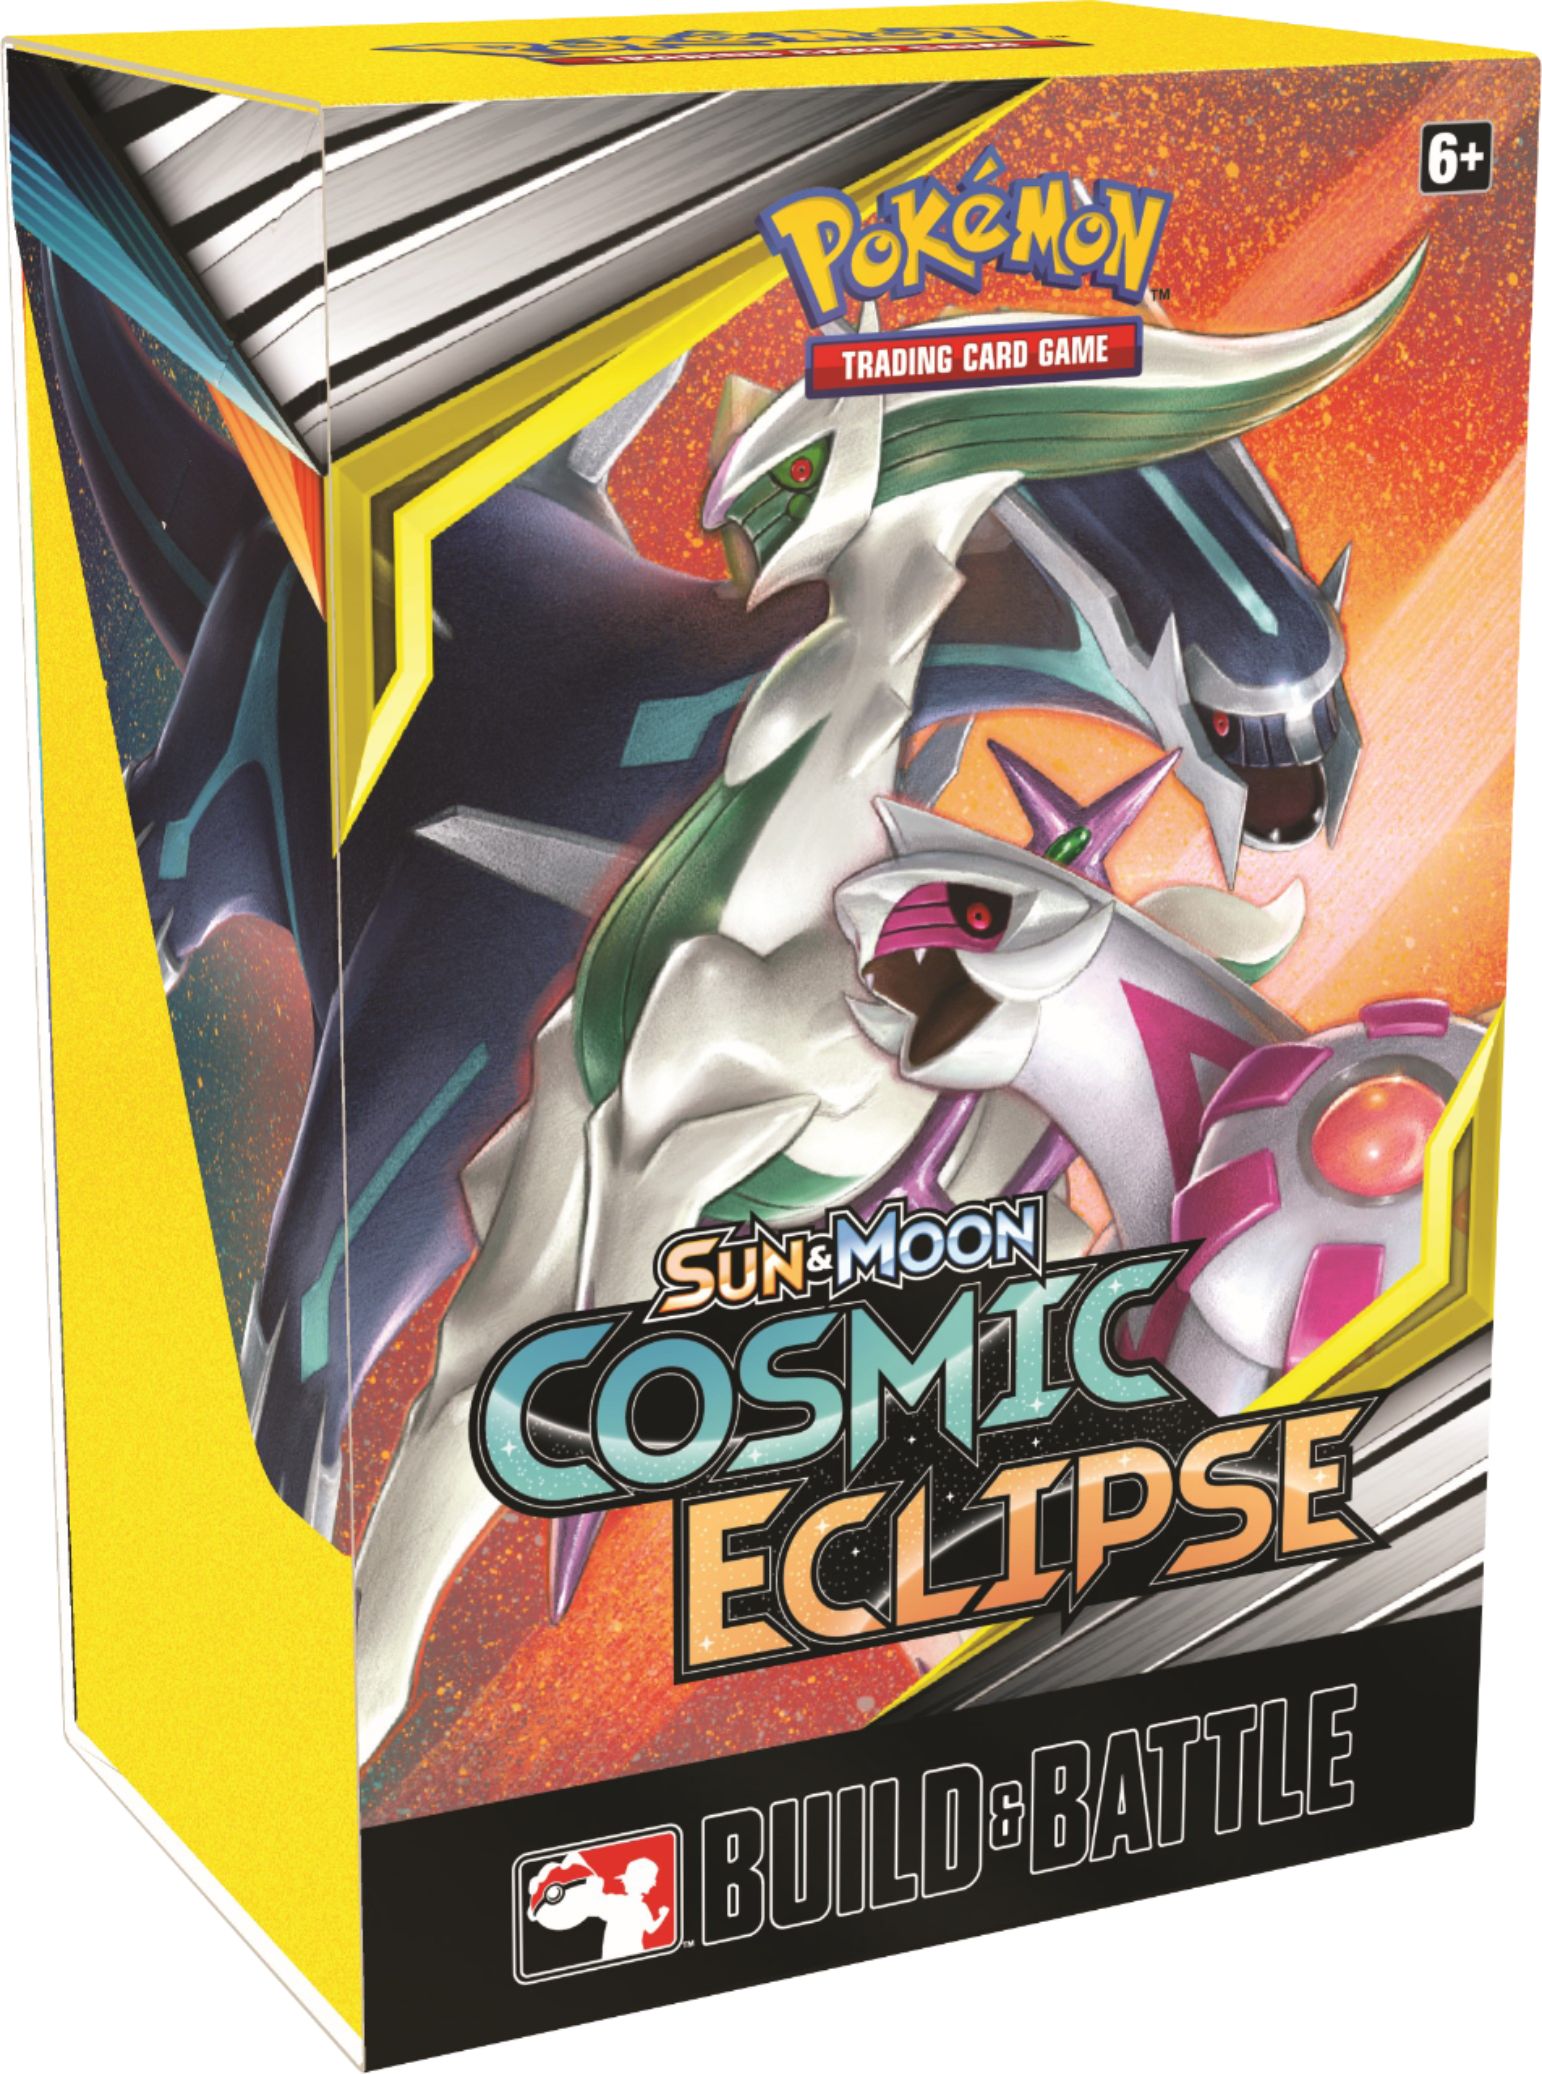 Pokémon - Trading Card Game: Sun & Moon - Cosmic Eclipse Build & Battle Box